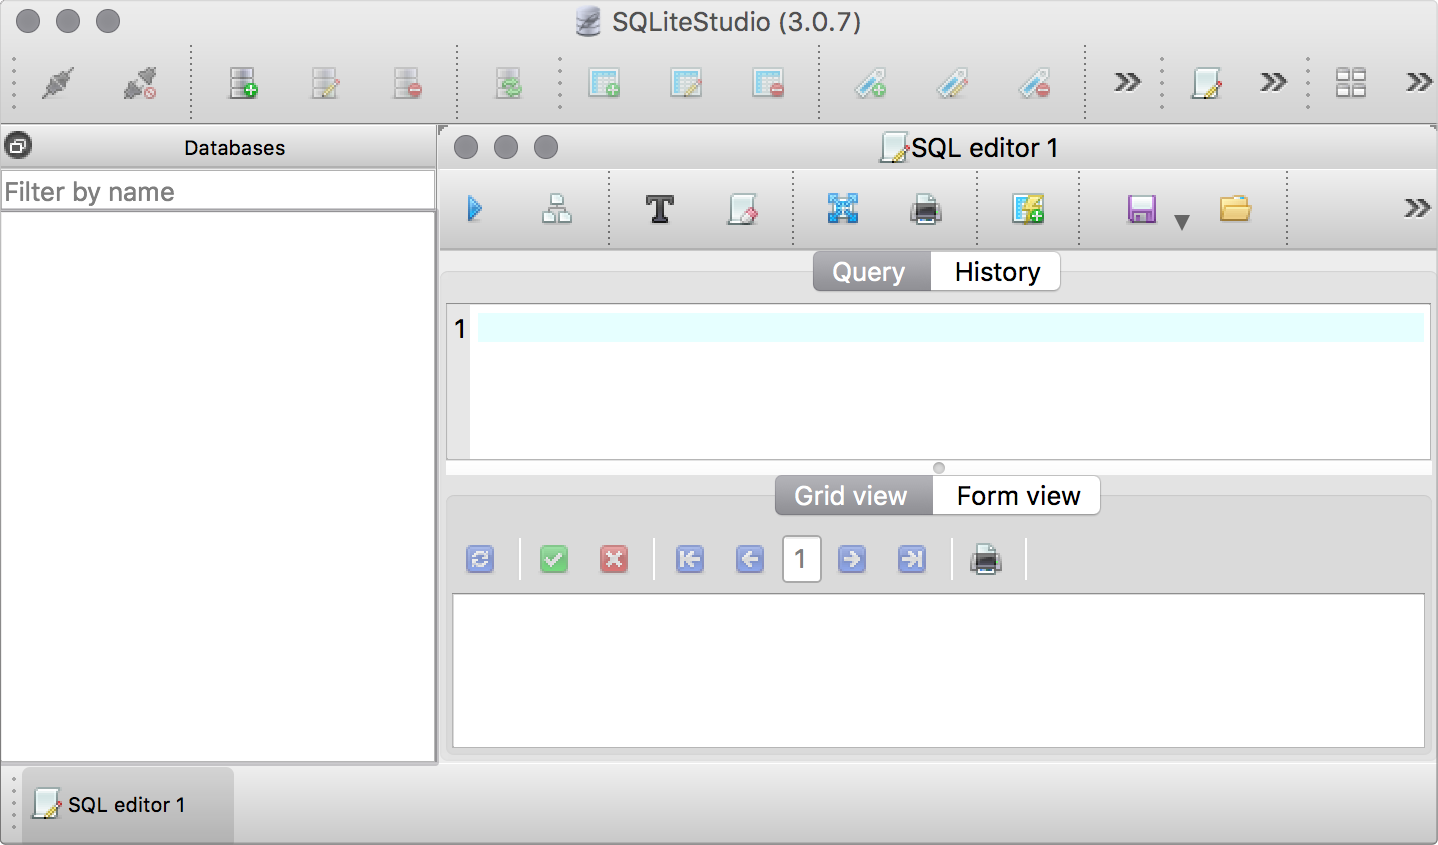 SQLite Studio main screen